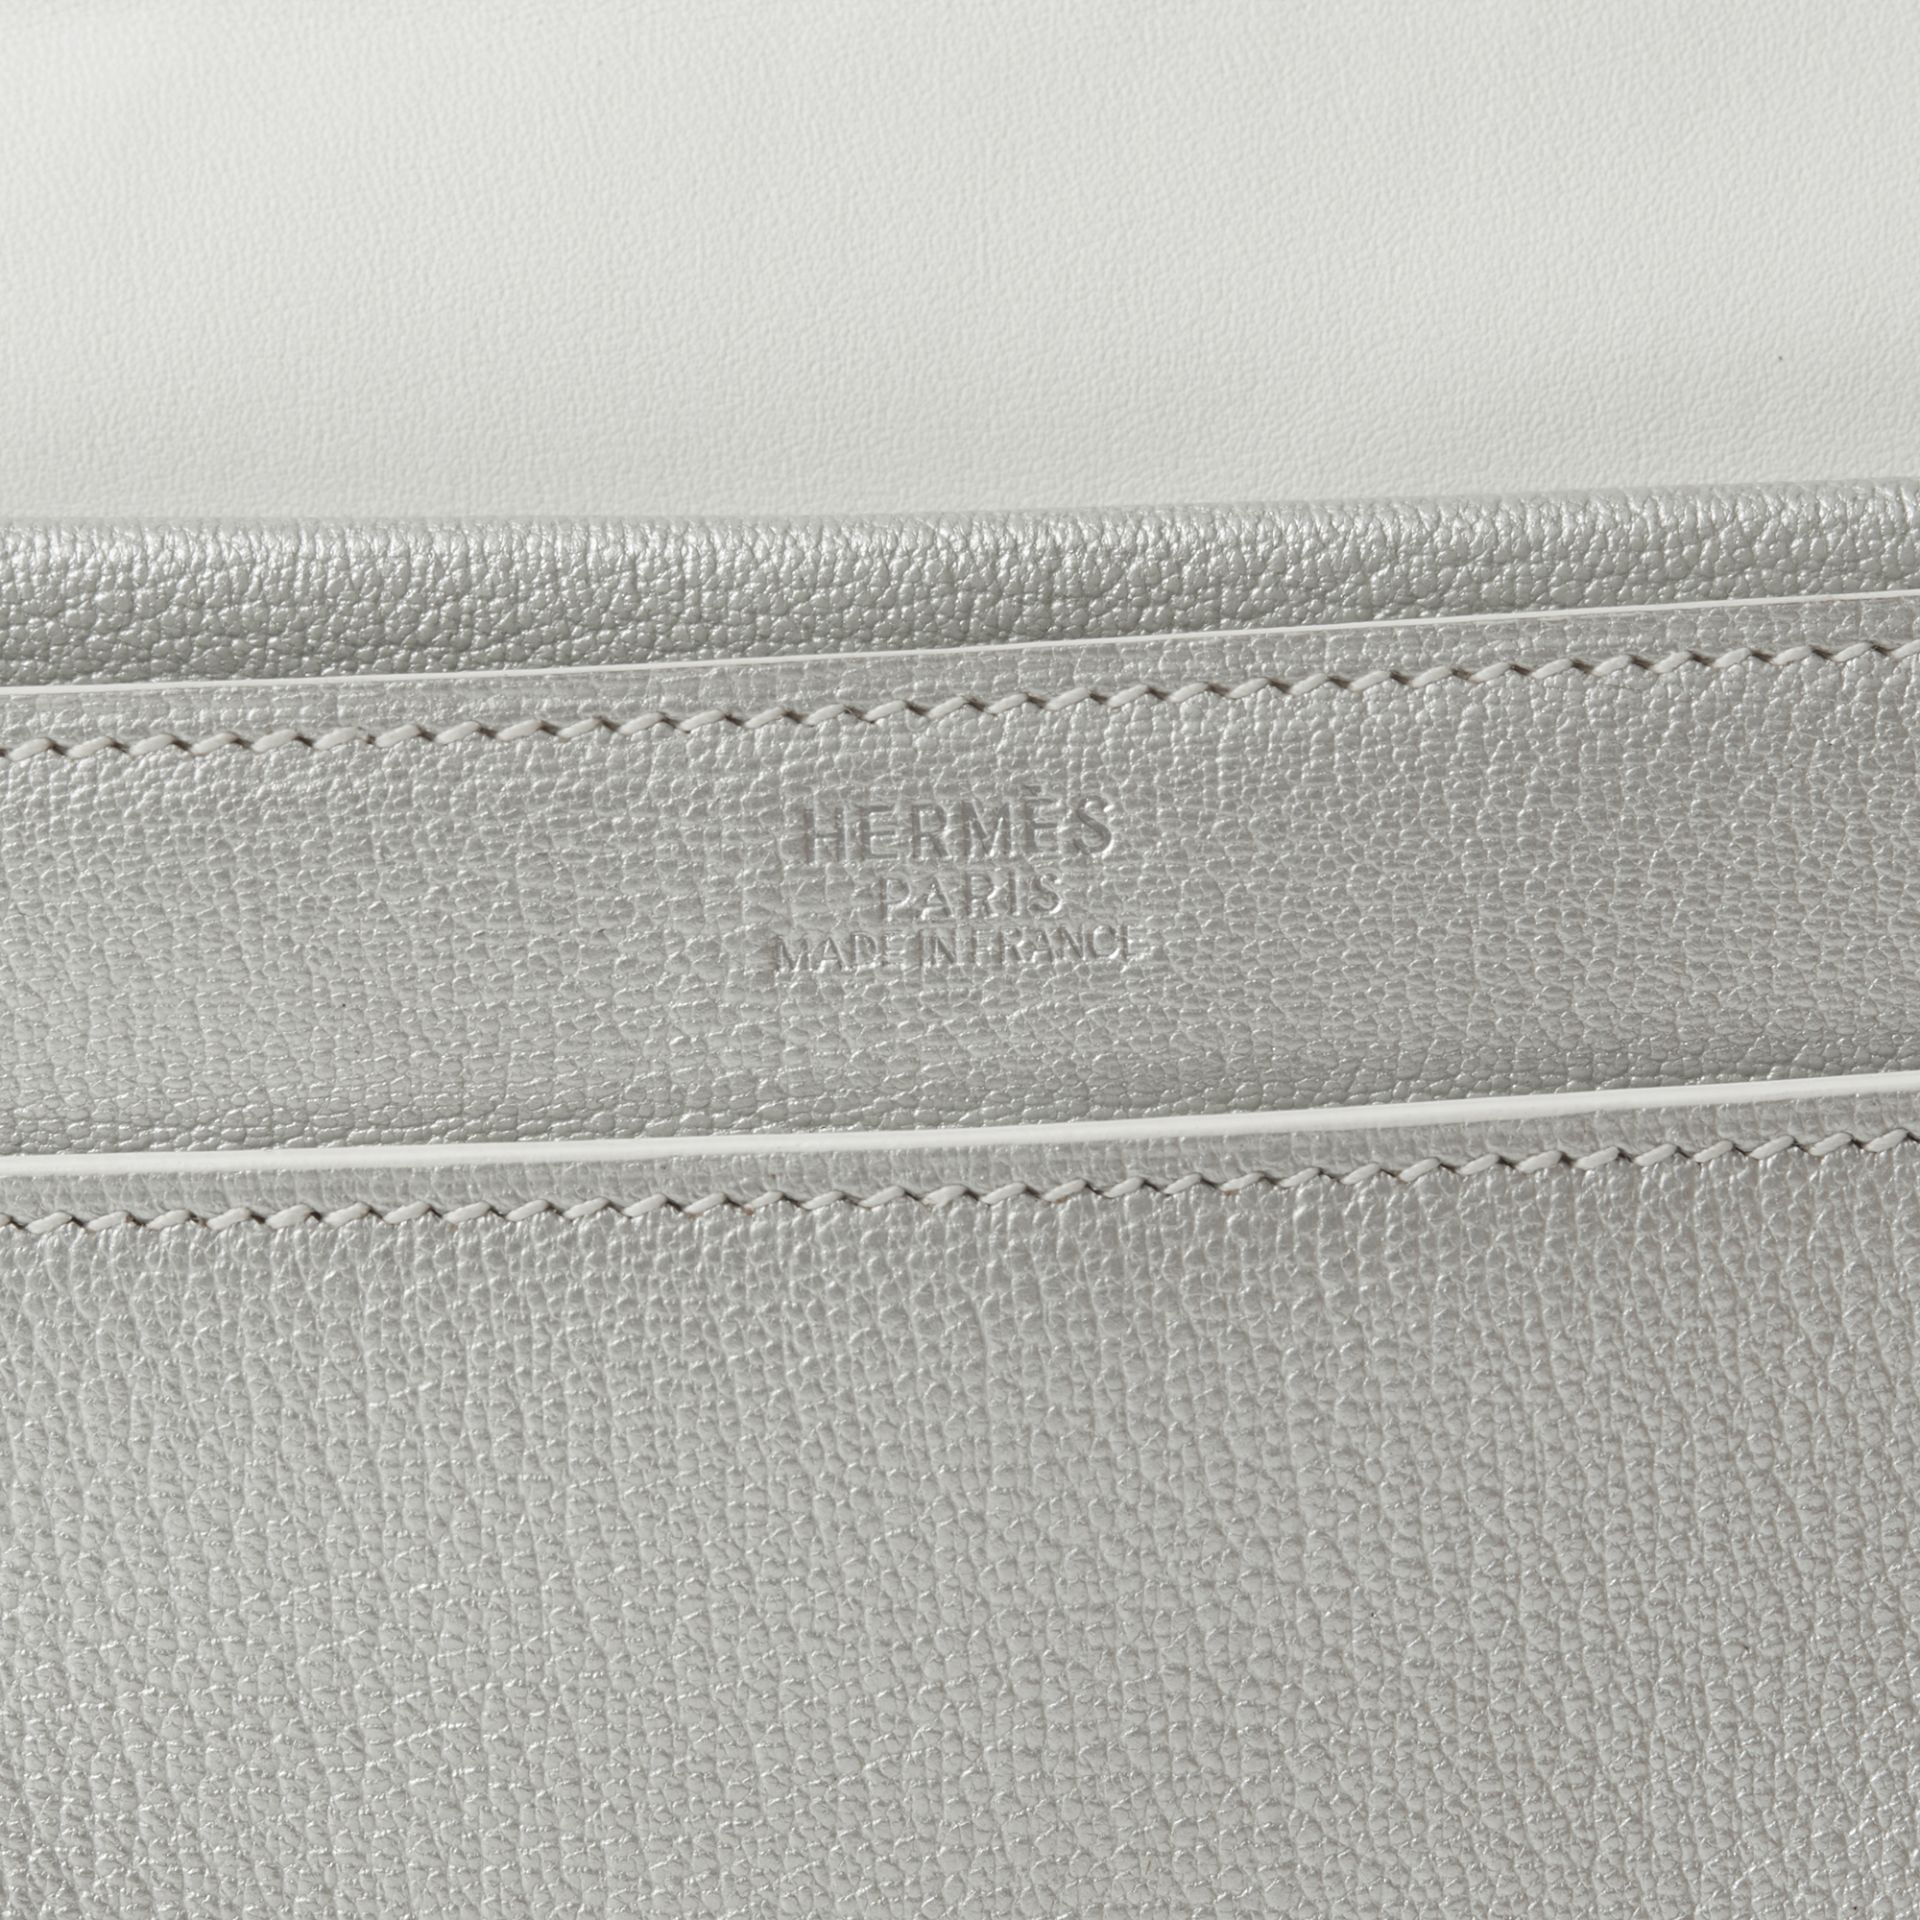 Hermès Silver Metallic Chevre Leather 365 Pm - Image 4 of 12